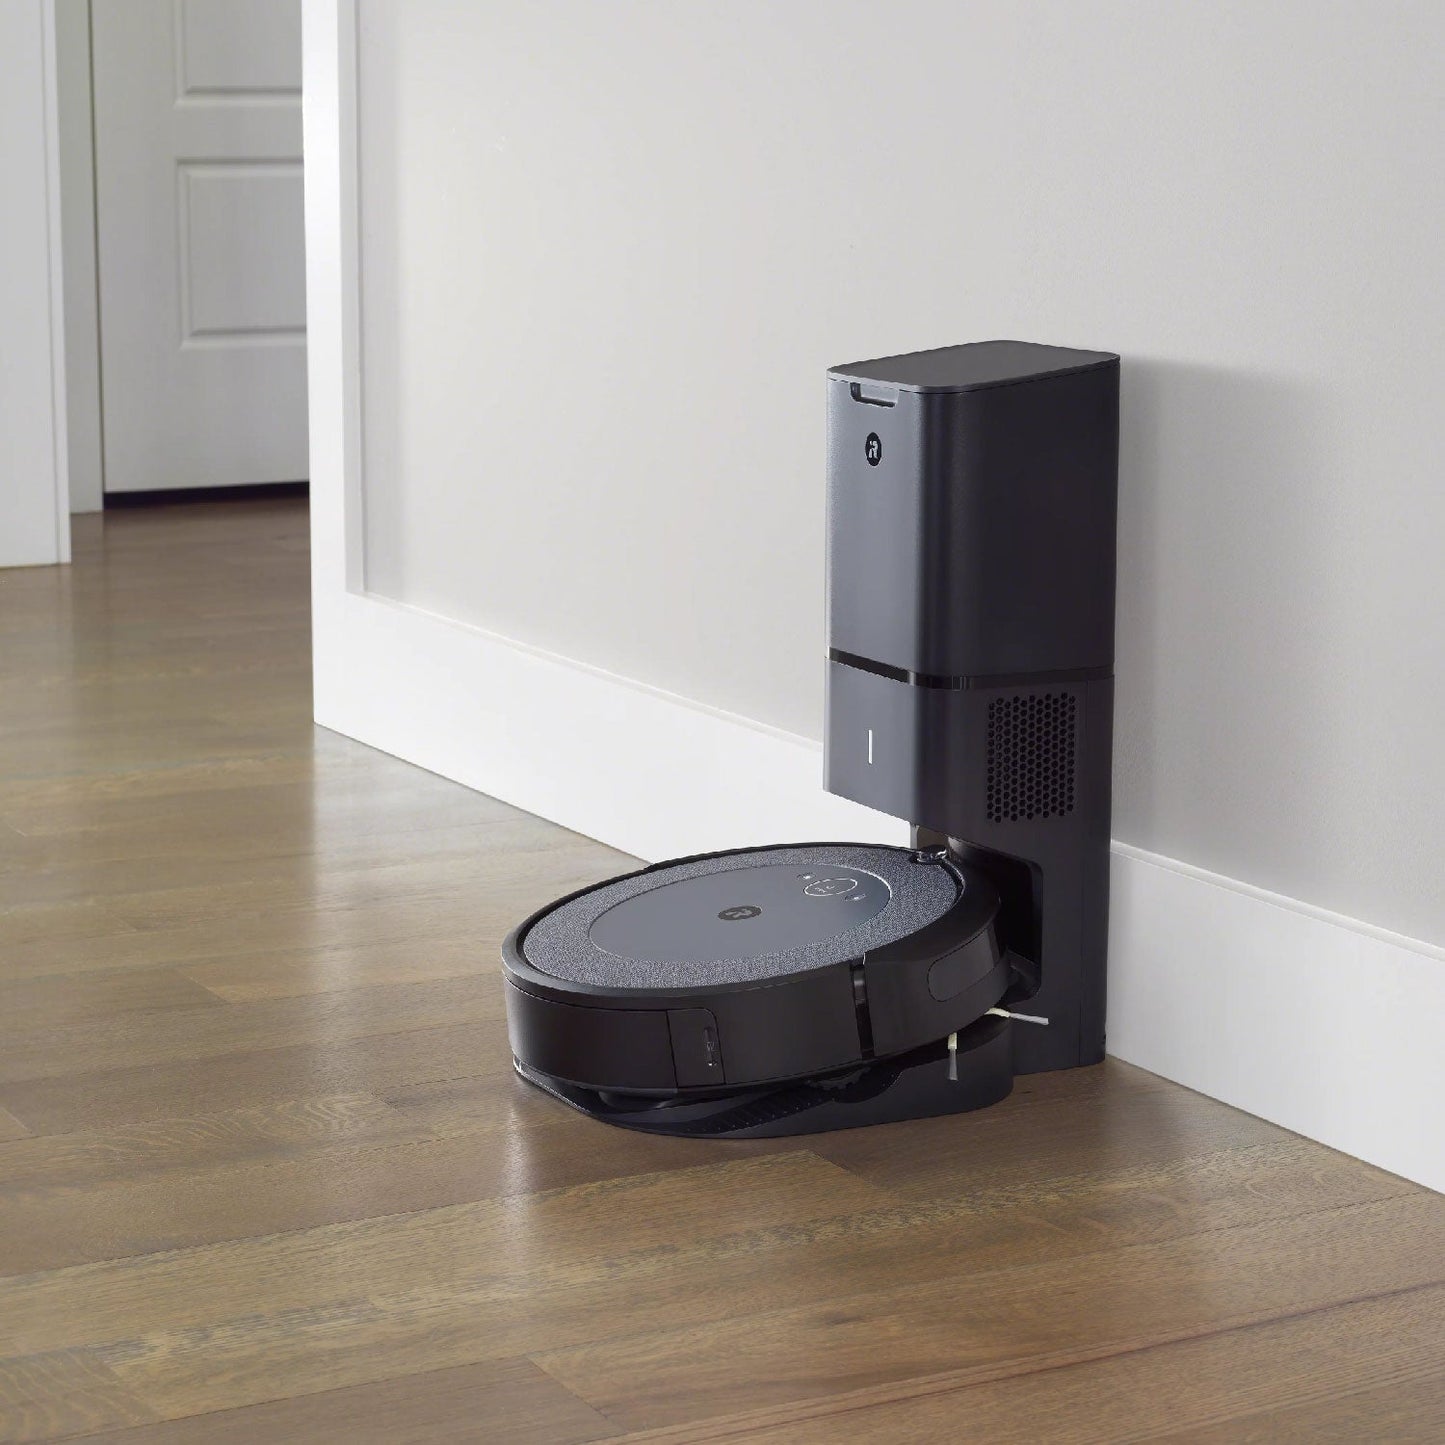 Aspiradora Robot Roomba I3+ Irobot1#Negro